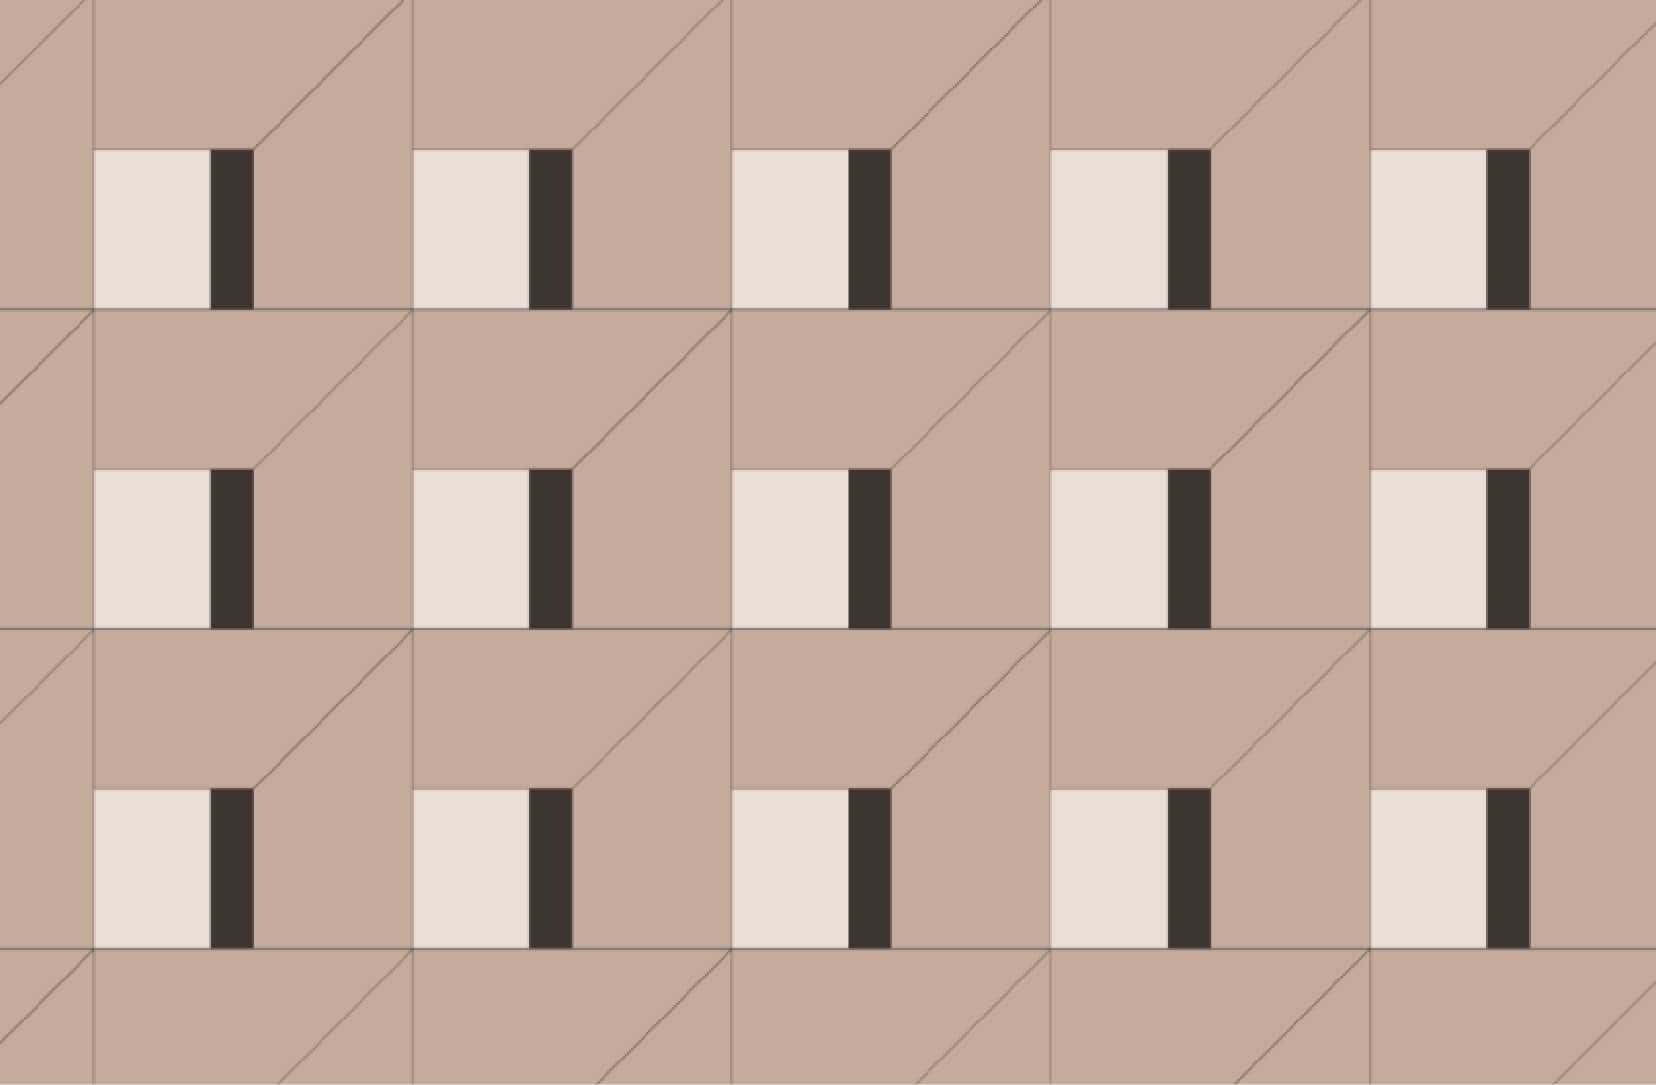 pattern 02